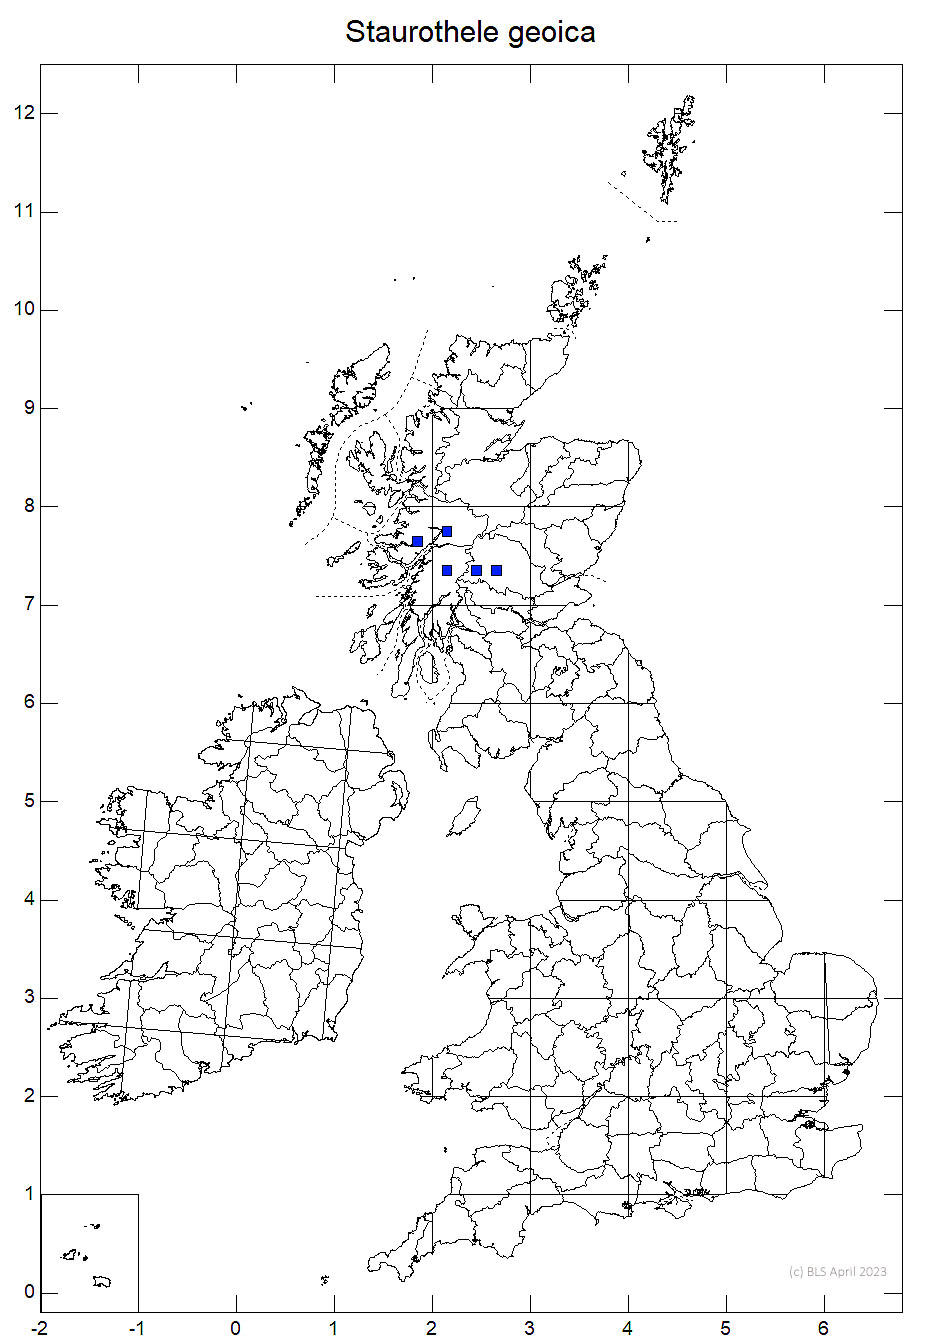 Staurothele geoica 10km sq distribution map